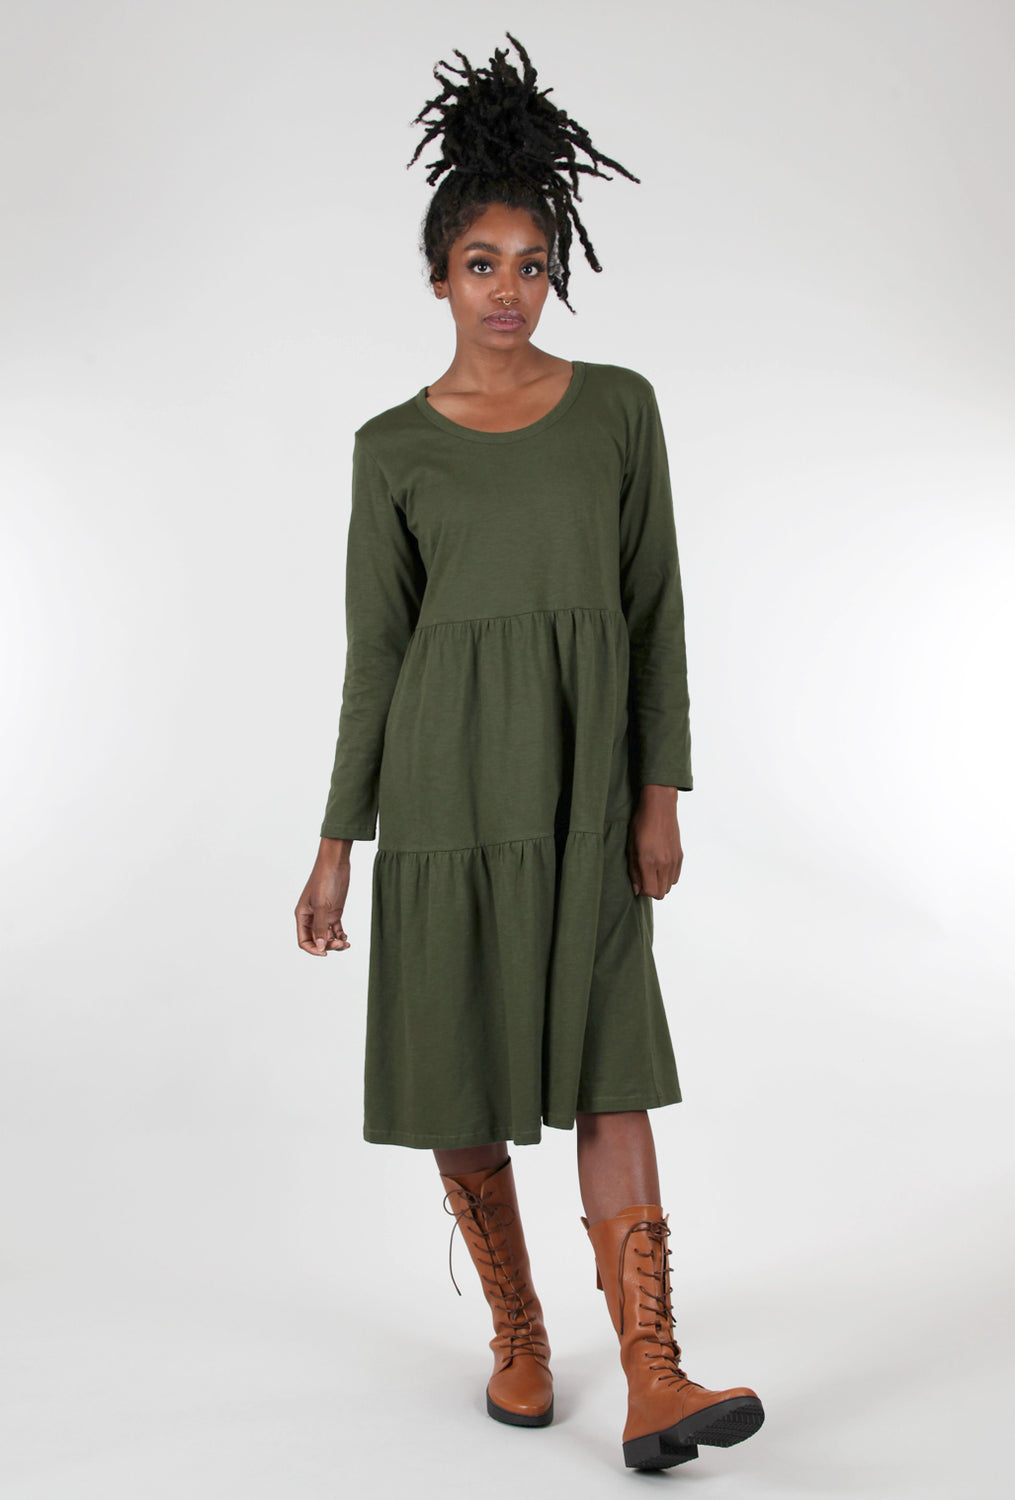 Maya Tiered Jersey Dress, Green